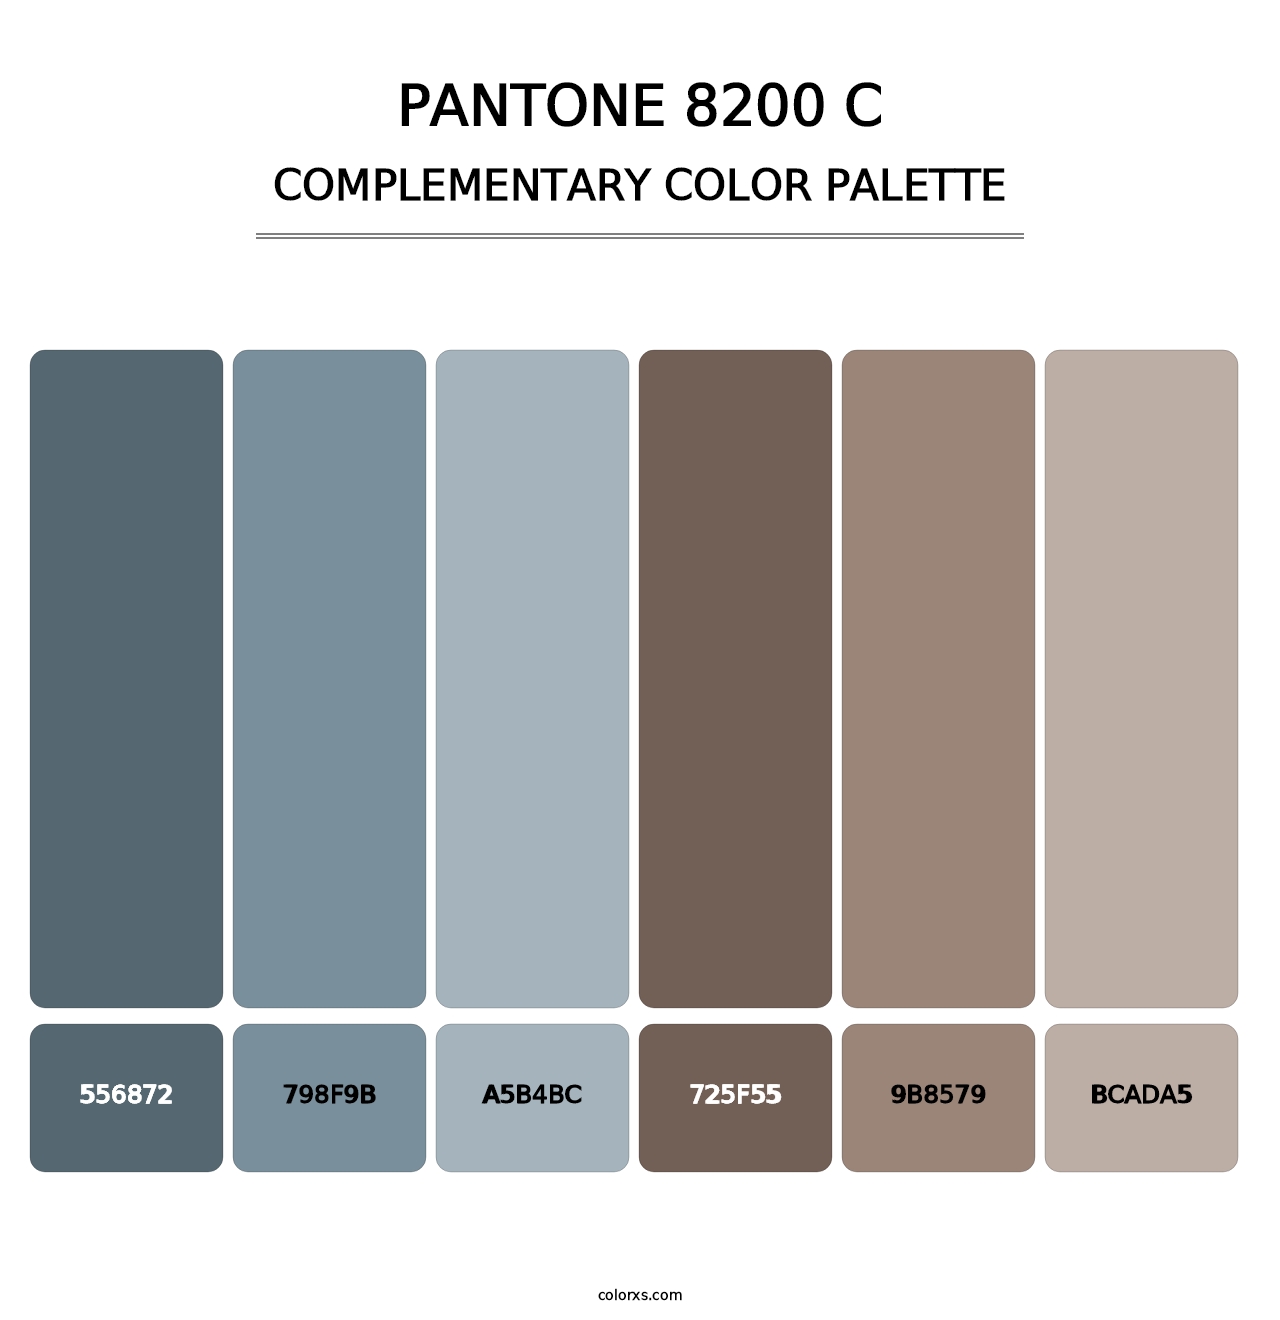 PANTONE 8200 C - Complementary Color Palette